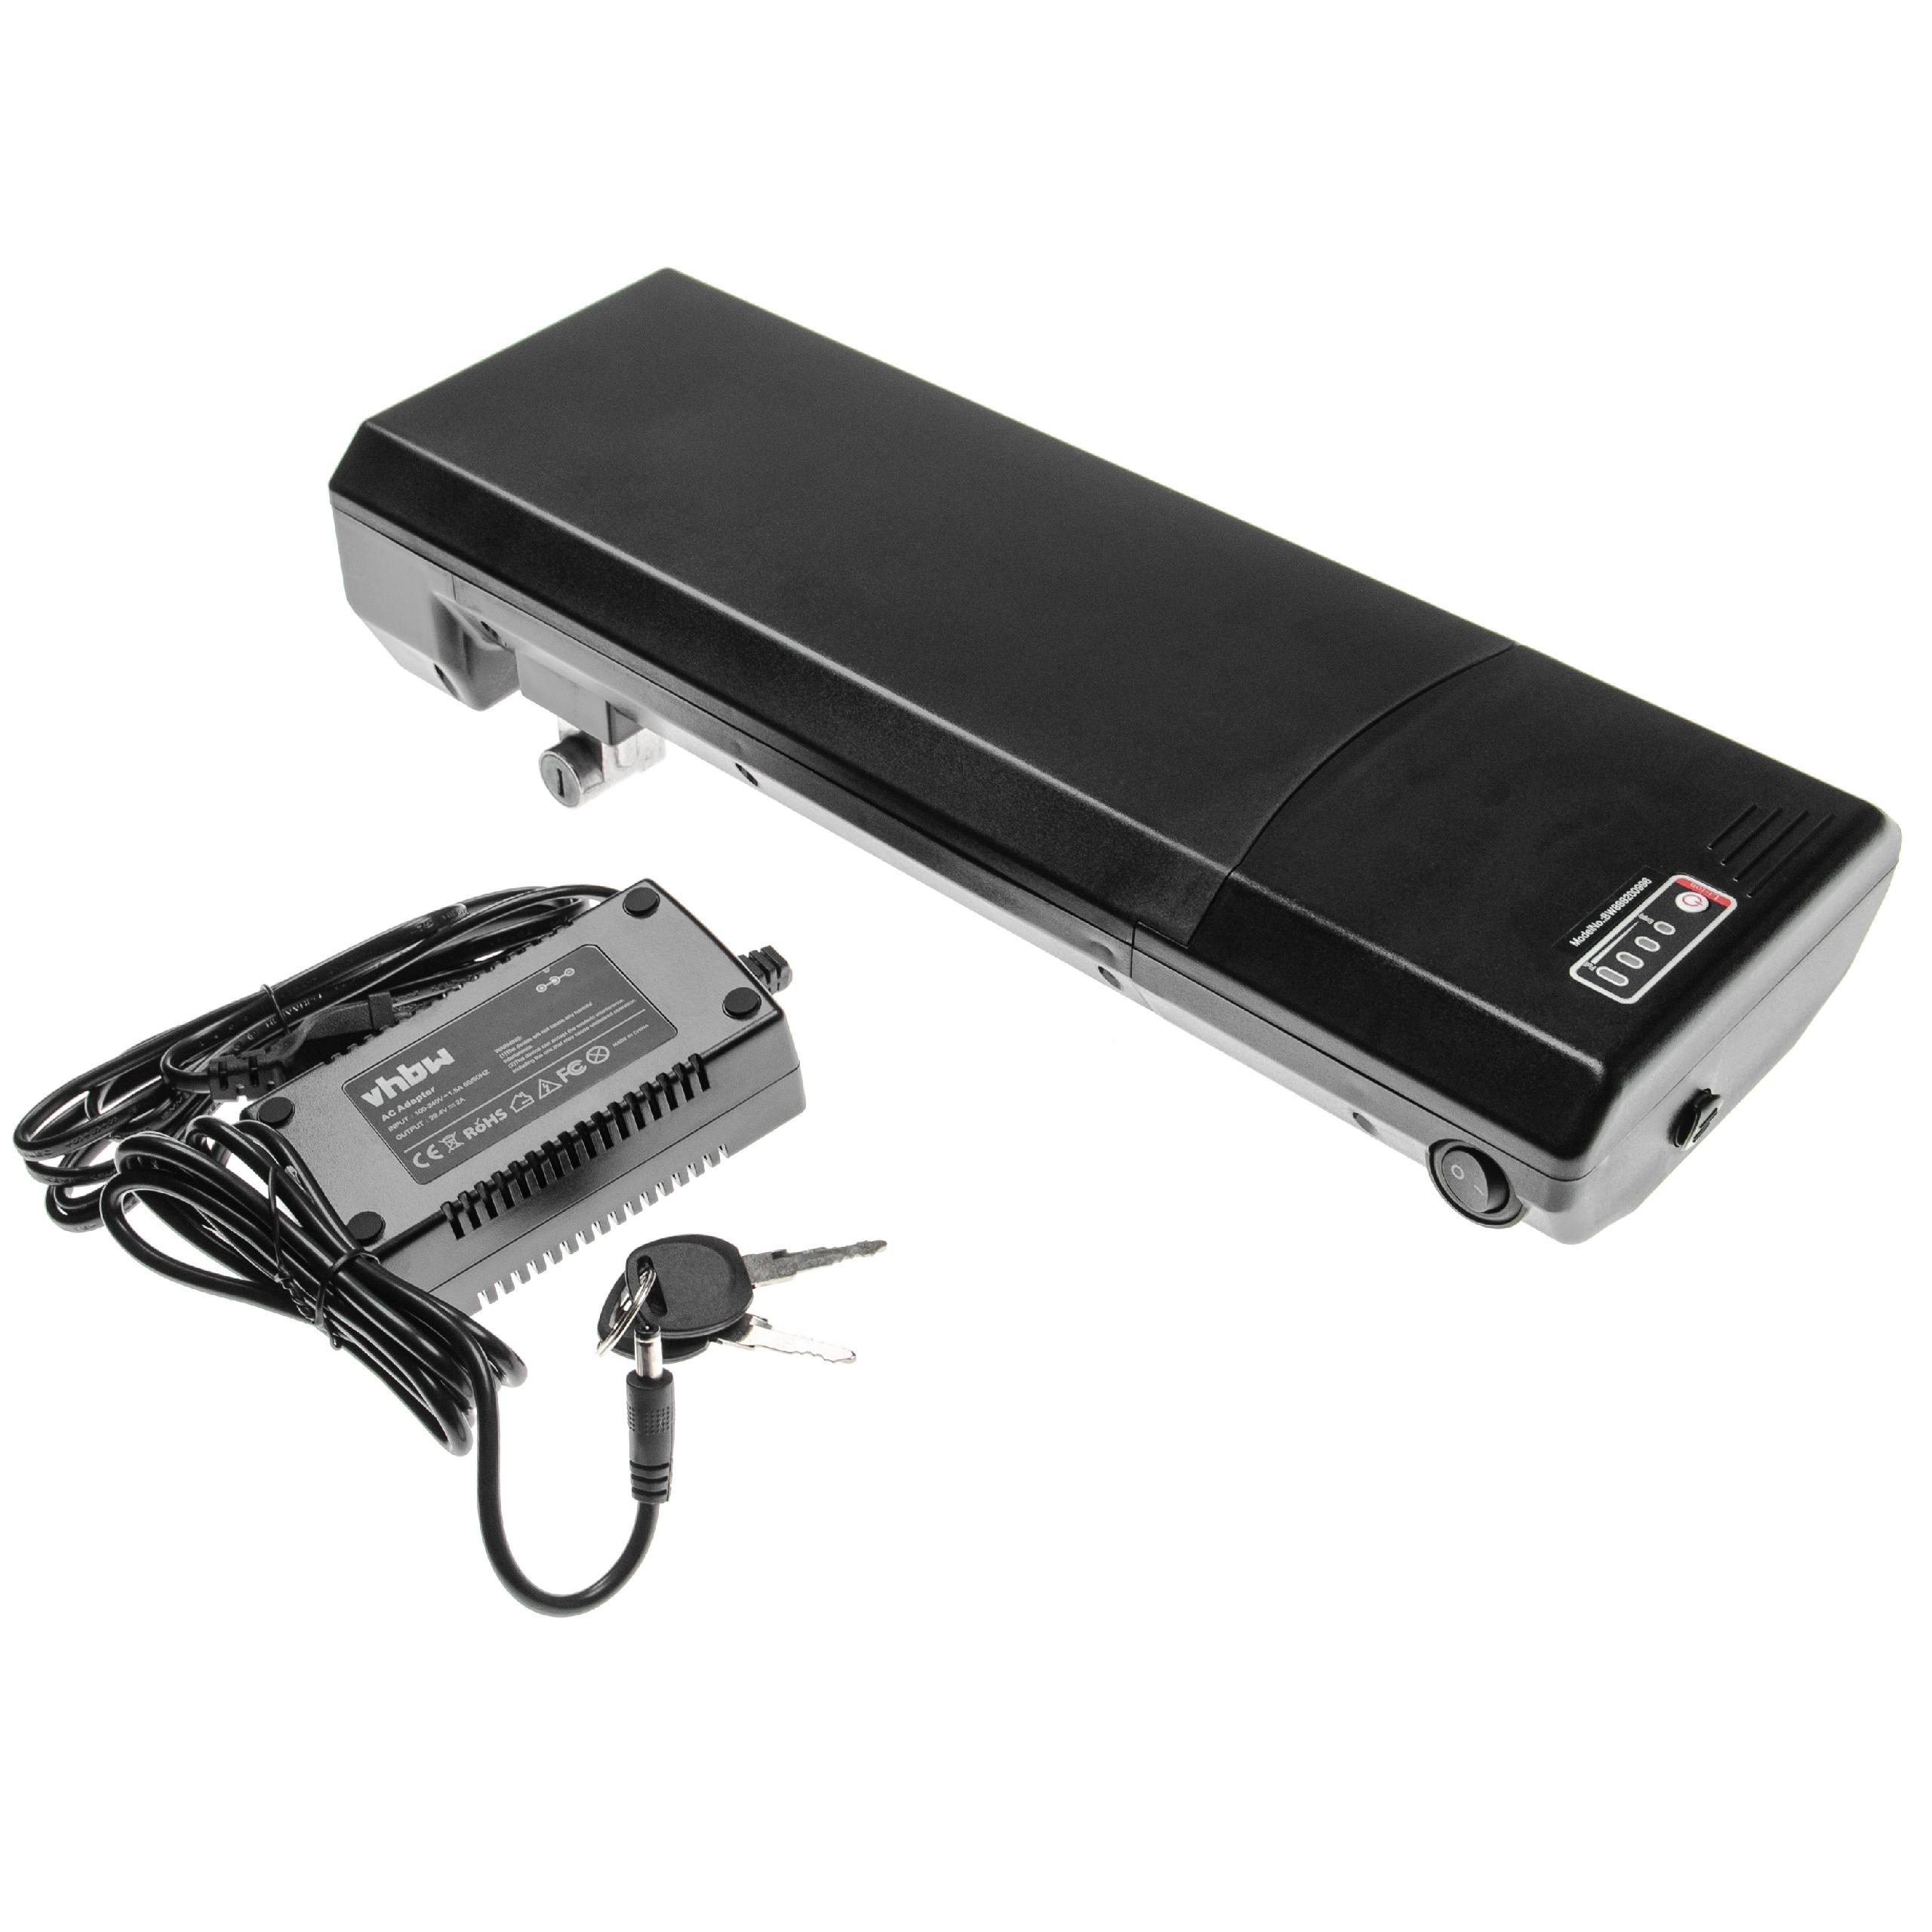 Akumulator bateria bagażnikowa do roweru elektrycznego - 8,8 Ah 24 V Li-Ion + ładowarka